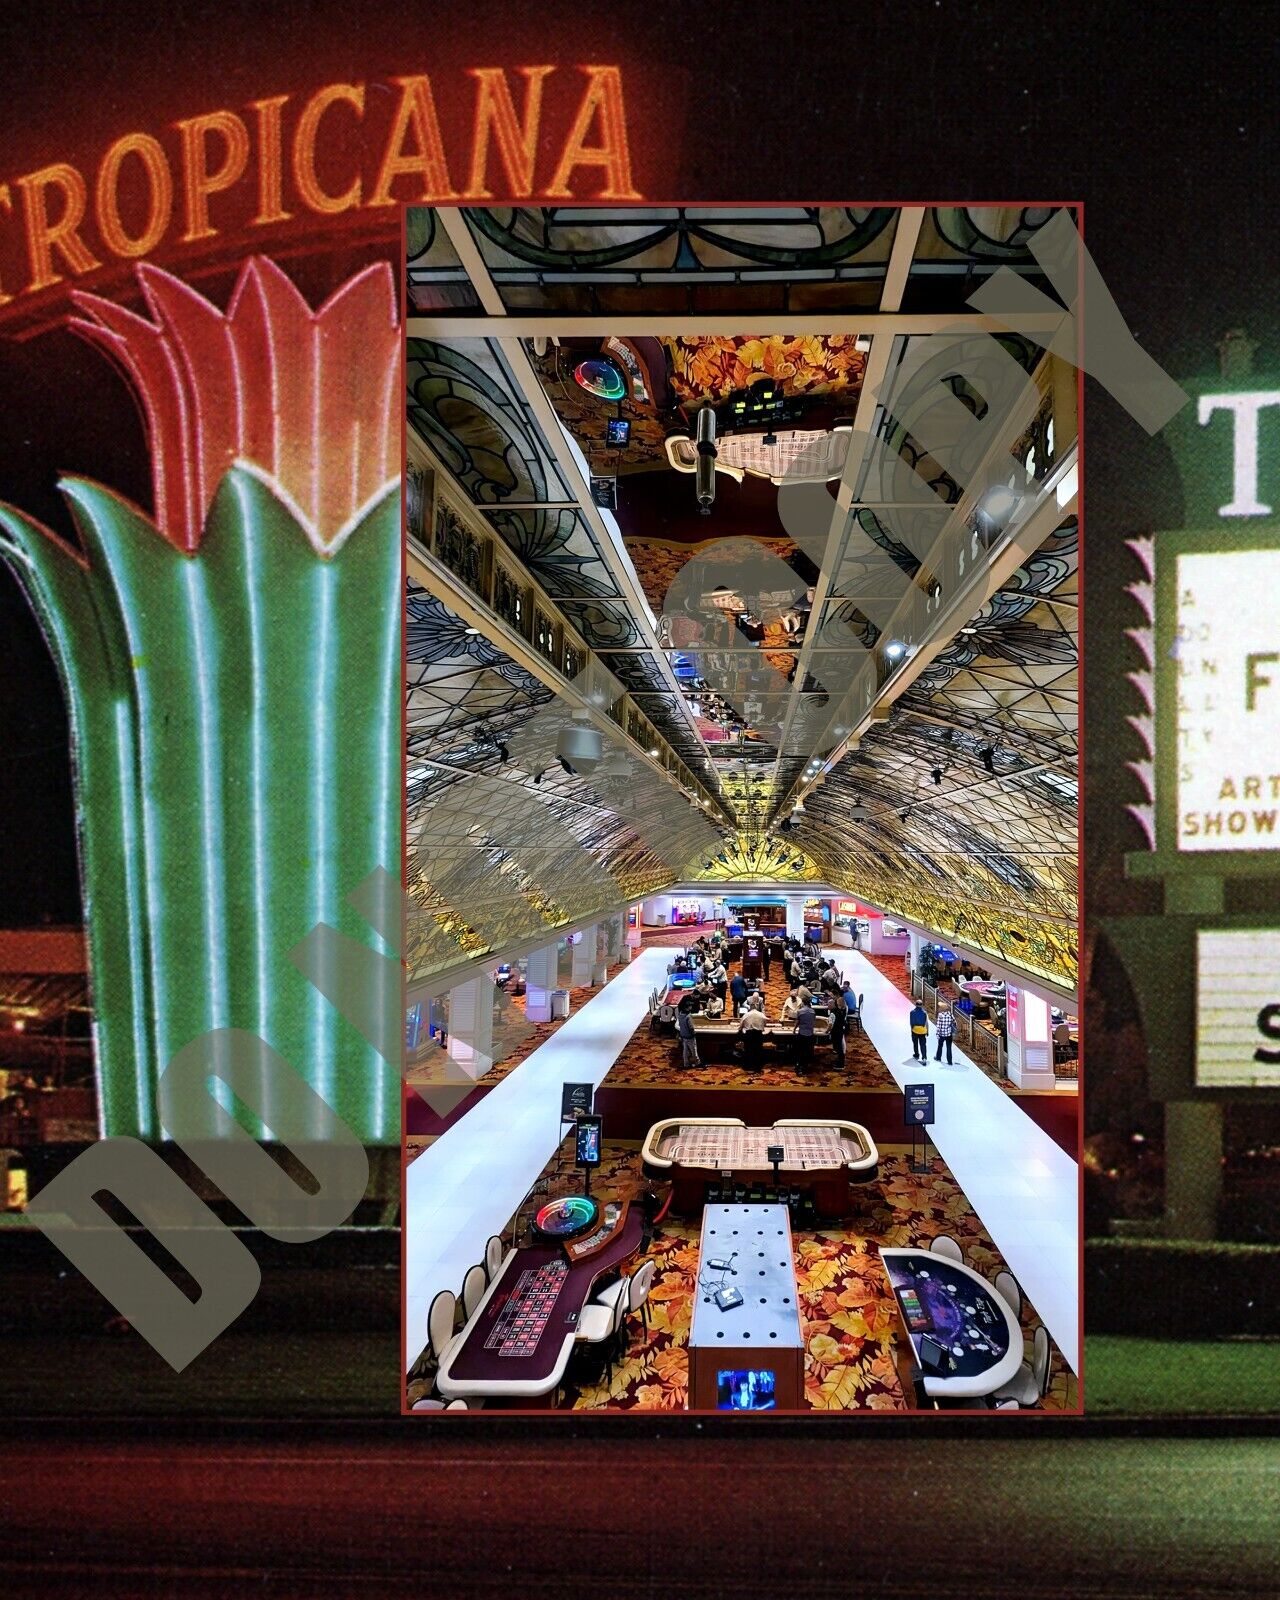 Tropicana Hotel Casino Las Vegas Ceiling Tiles Night Marque Collage 8x10 Photo